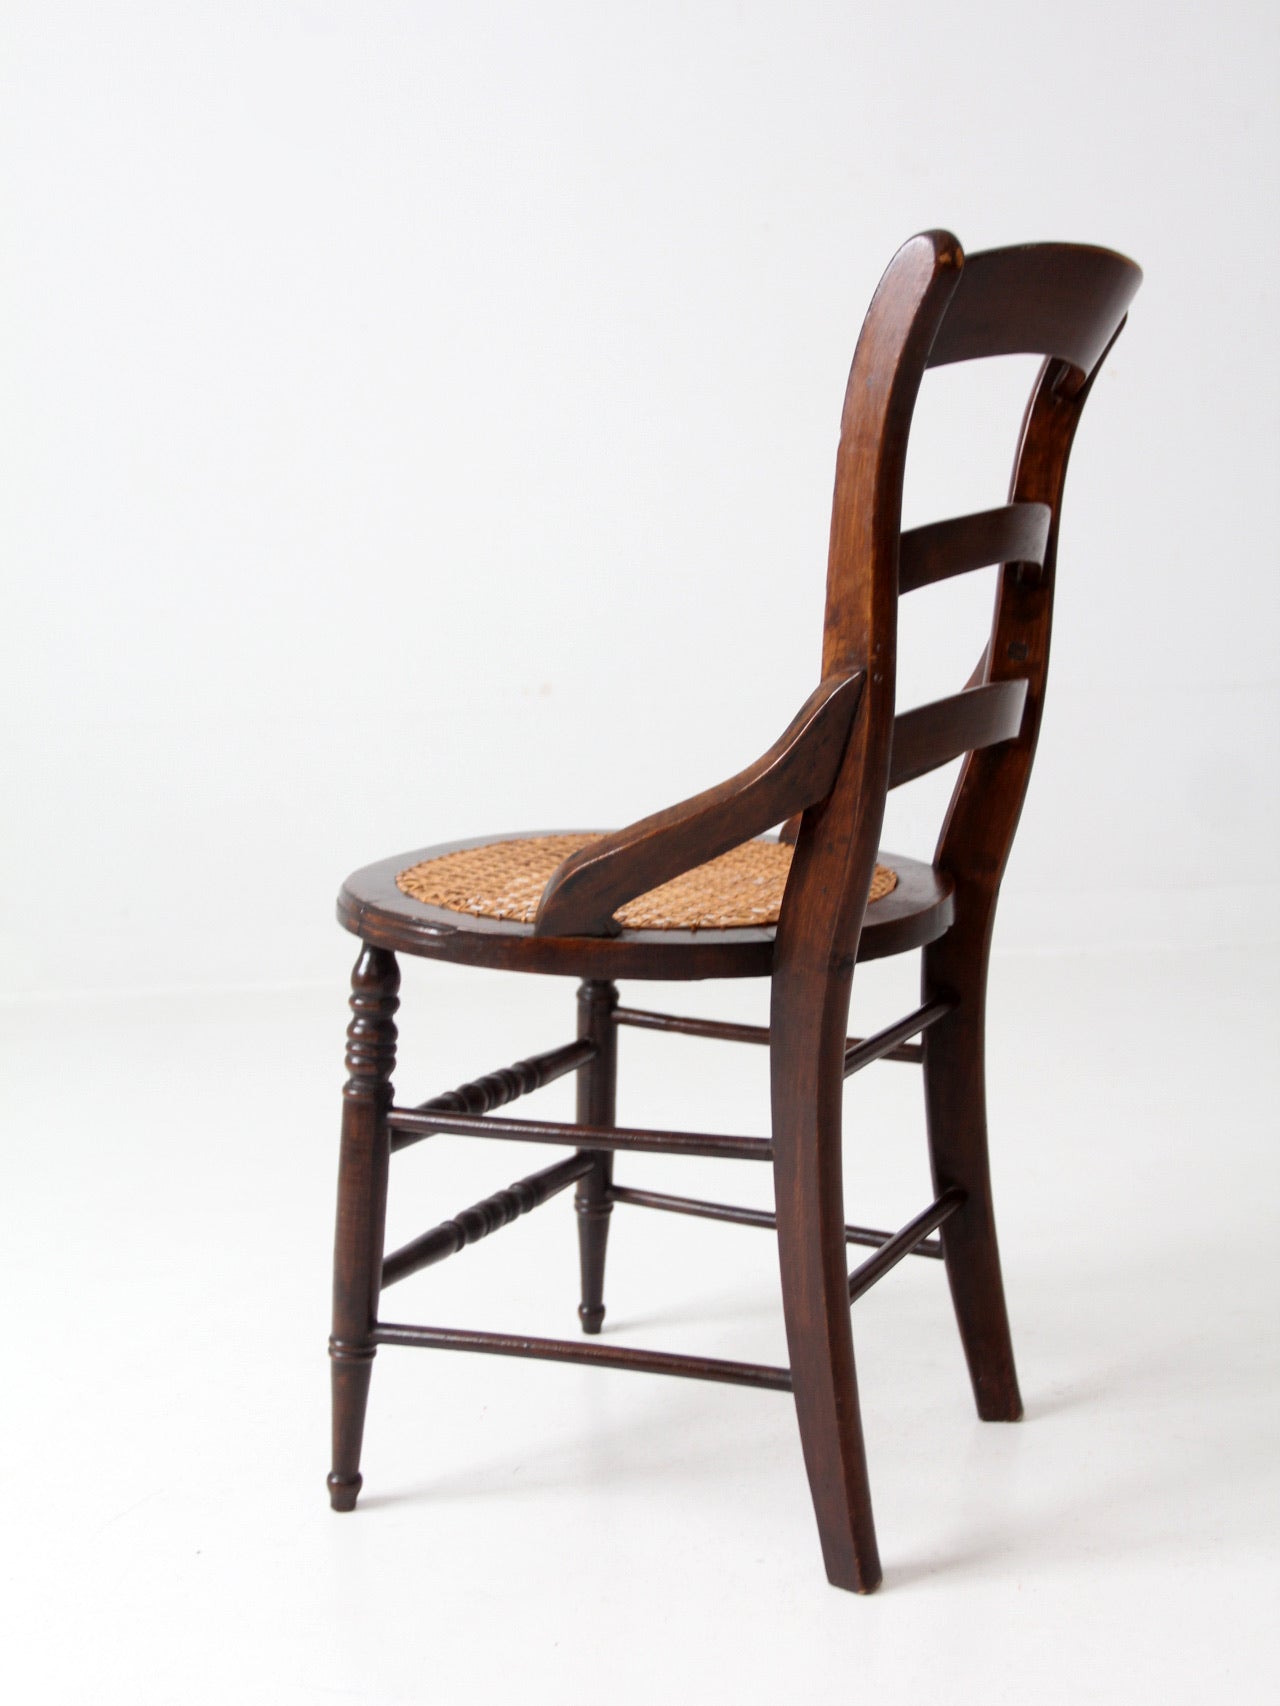 antique Victorian Cane Seat Chair